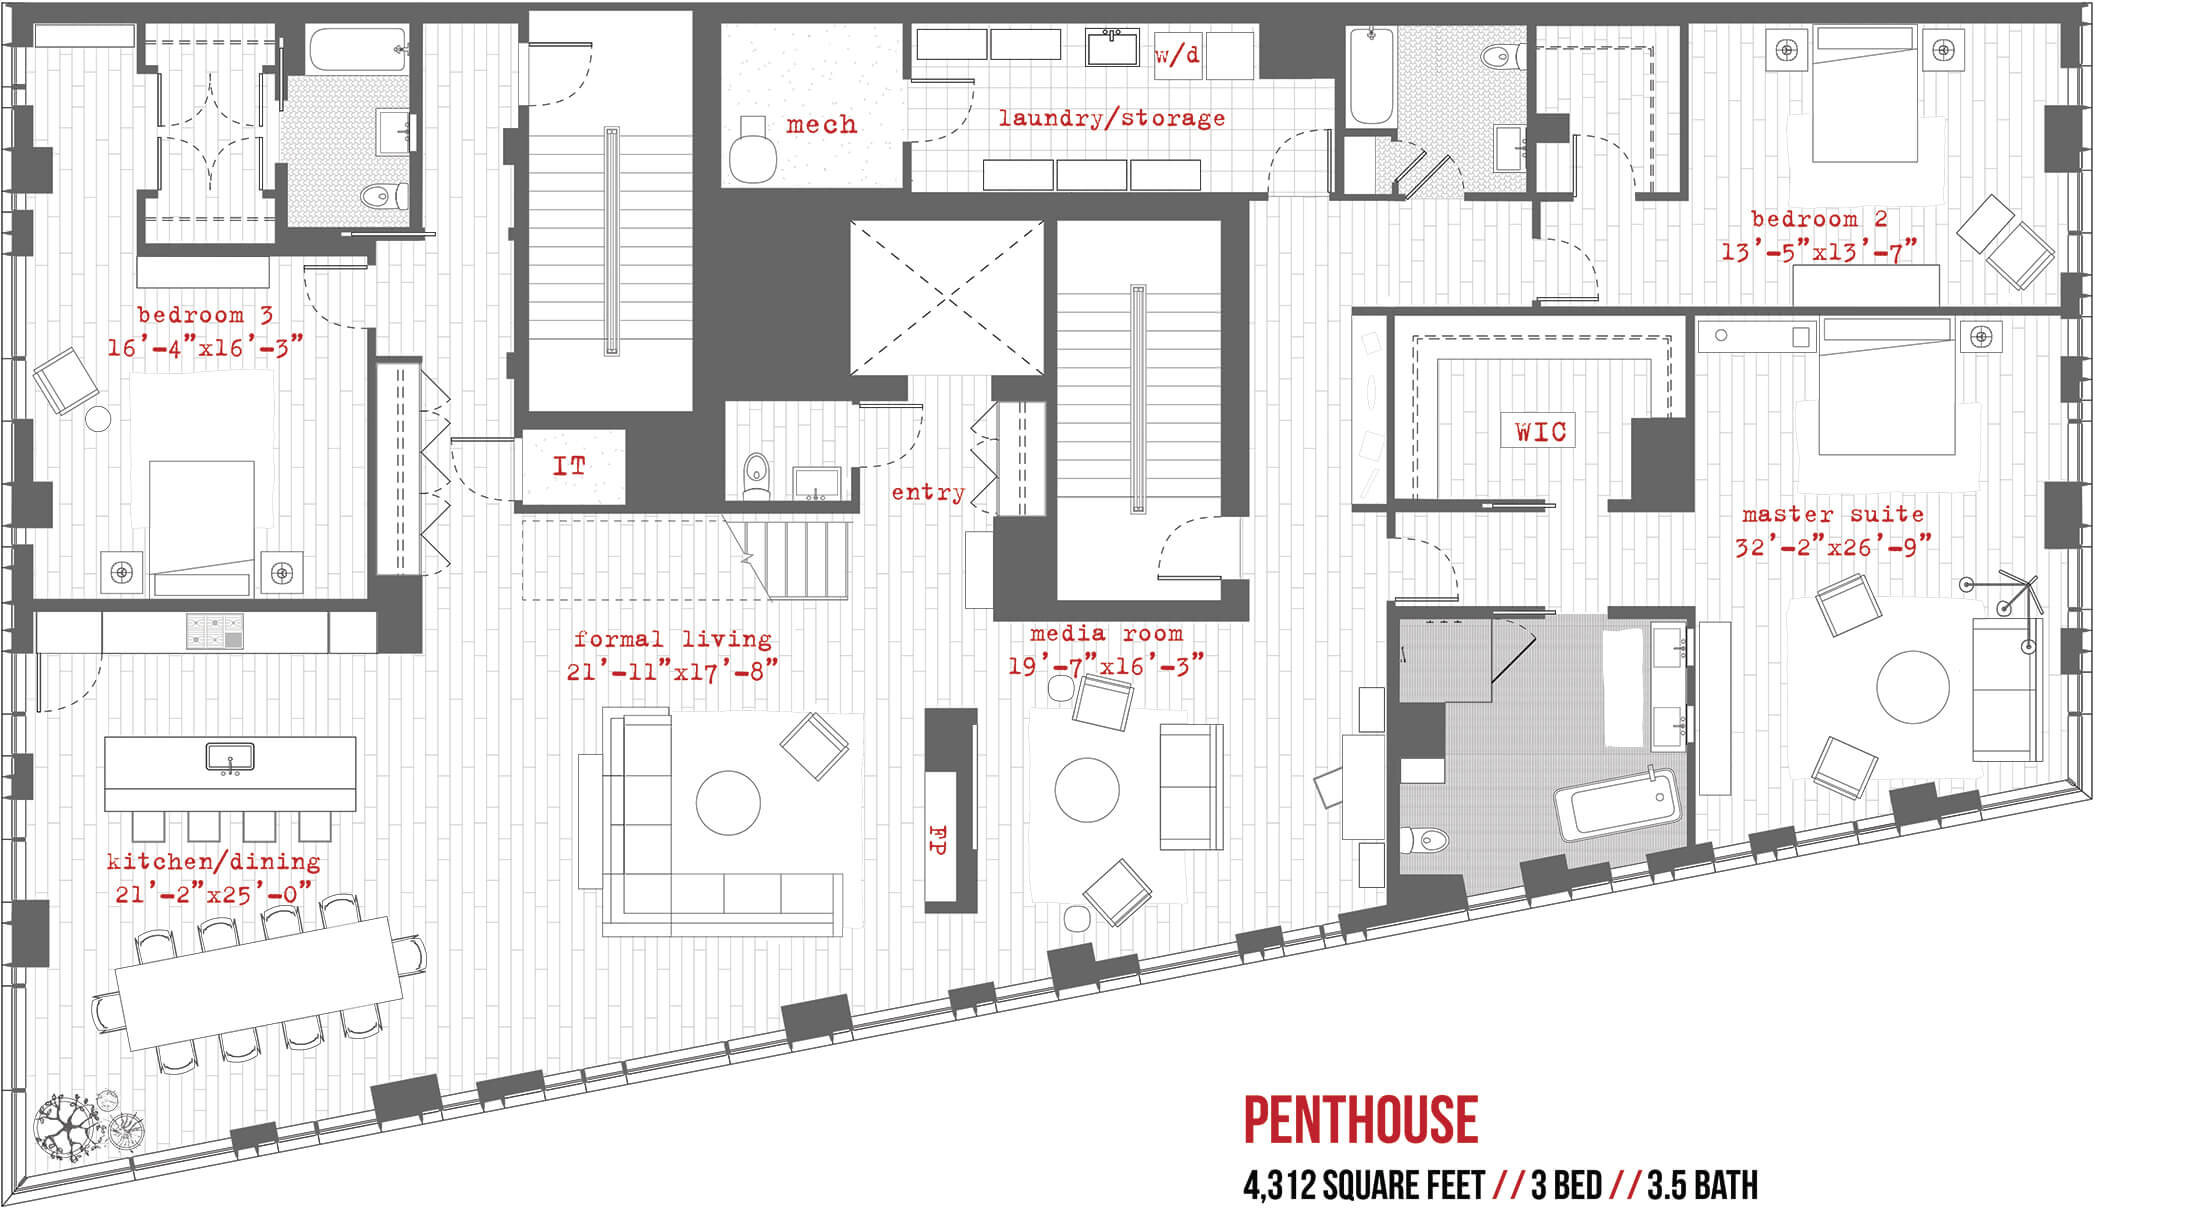 Penthouse Floor Plan.jpg